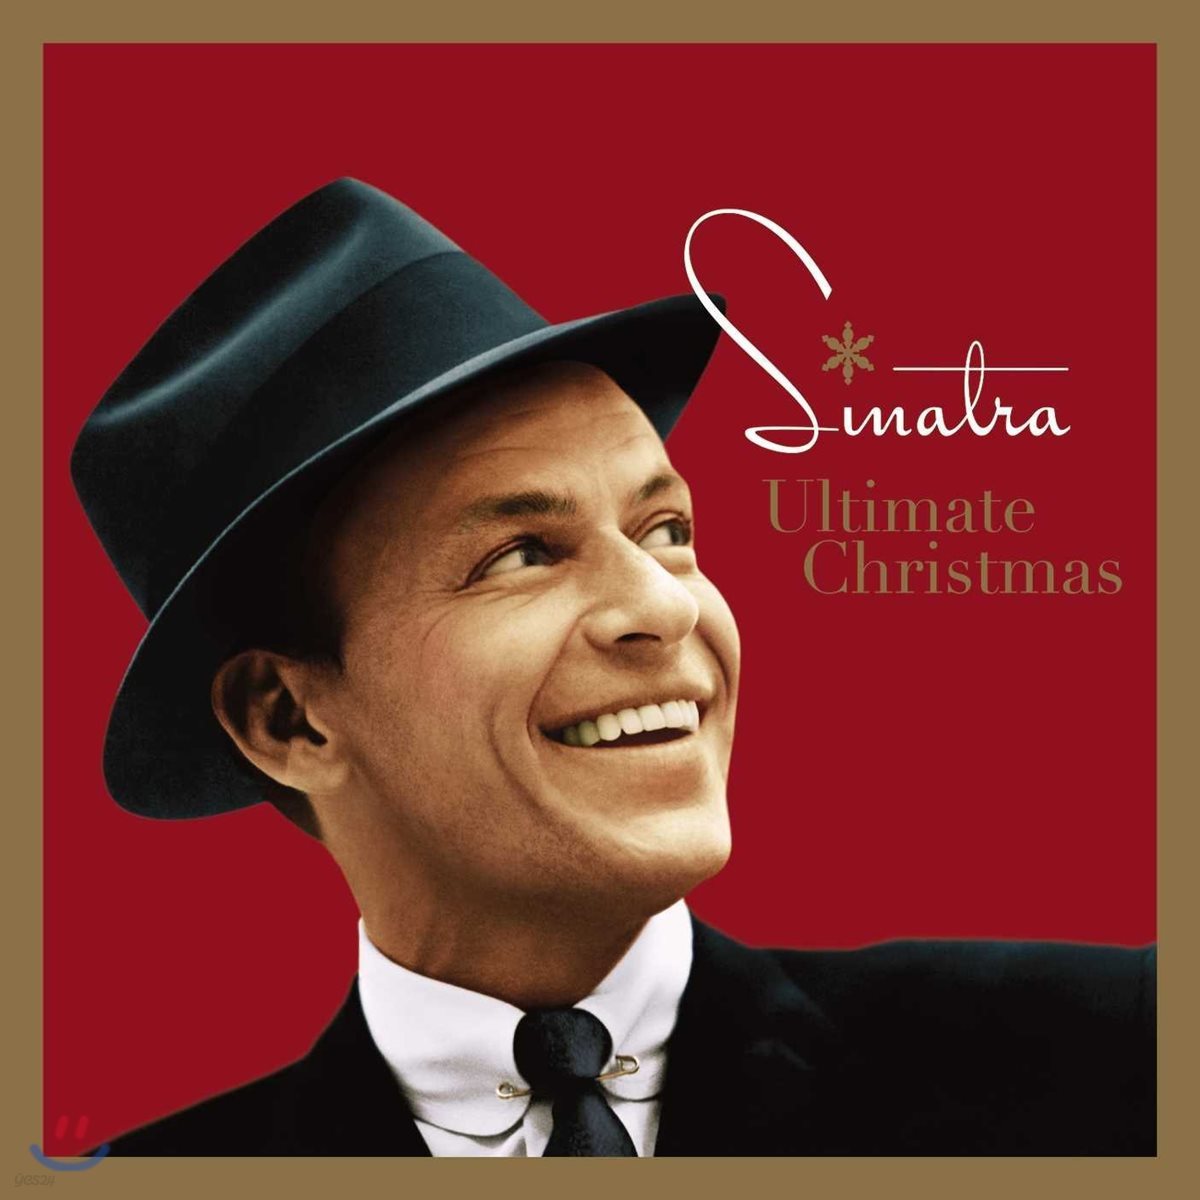 Frank Sinatra (프랭크 시나트라) - Ultimate Christmas [2LP]